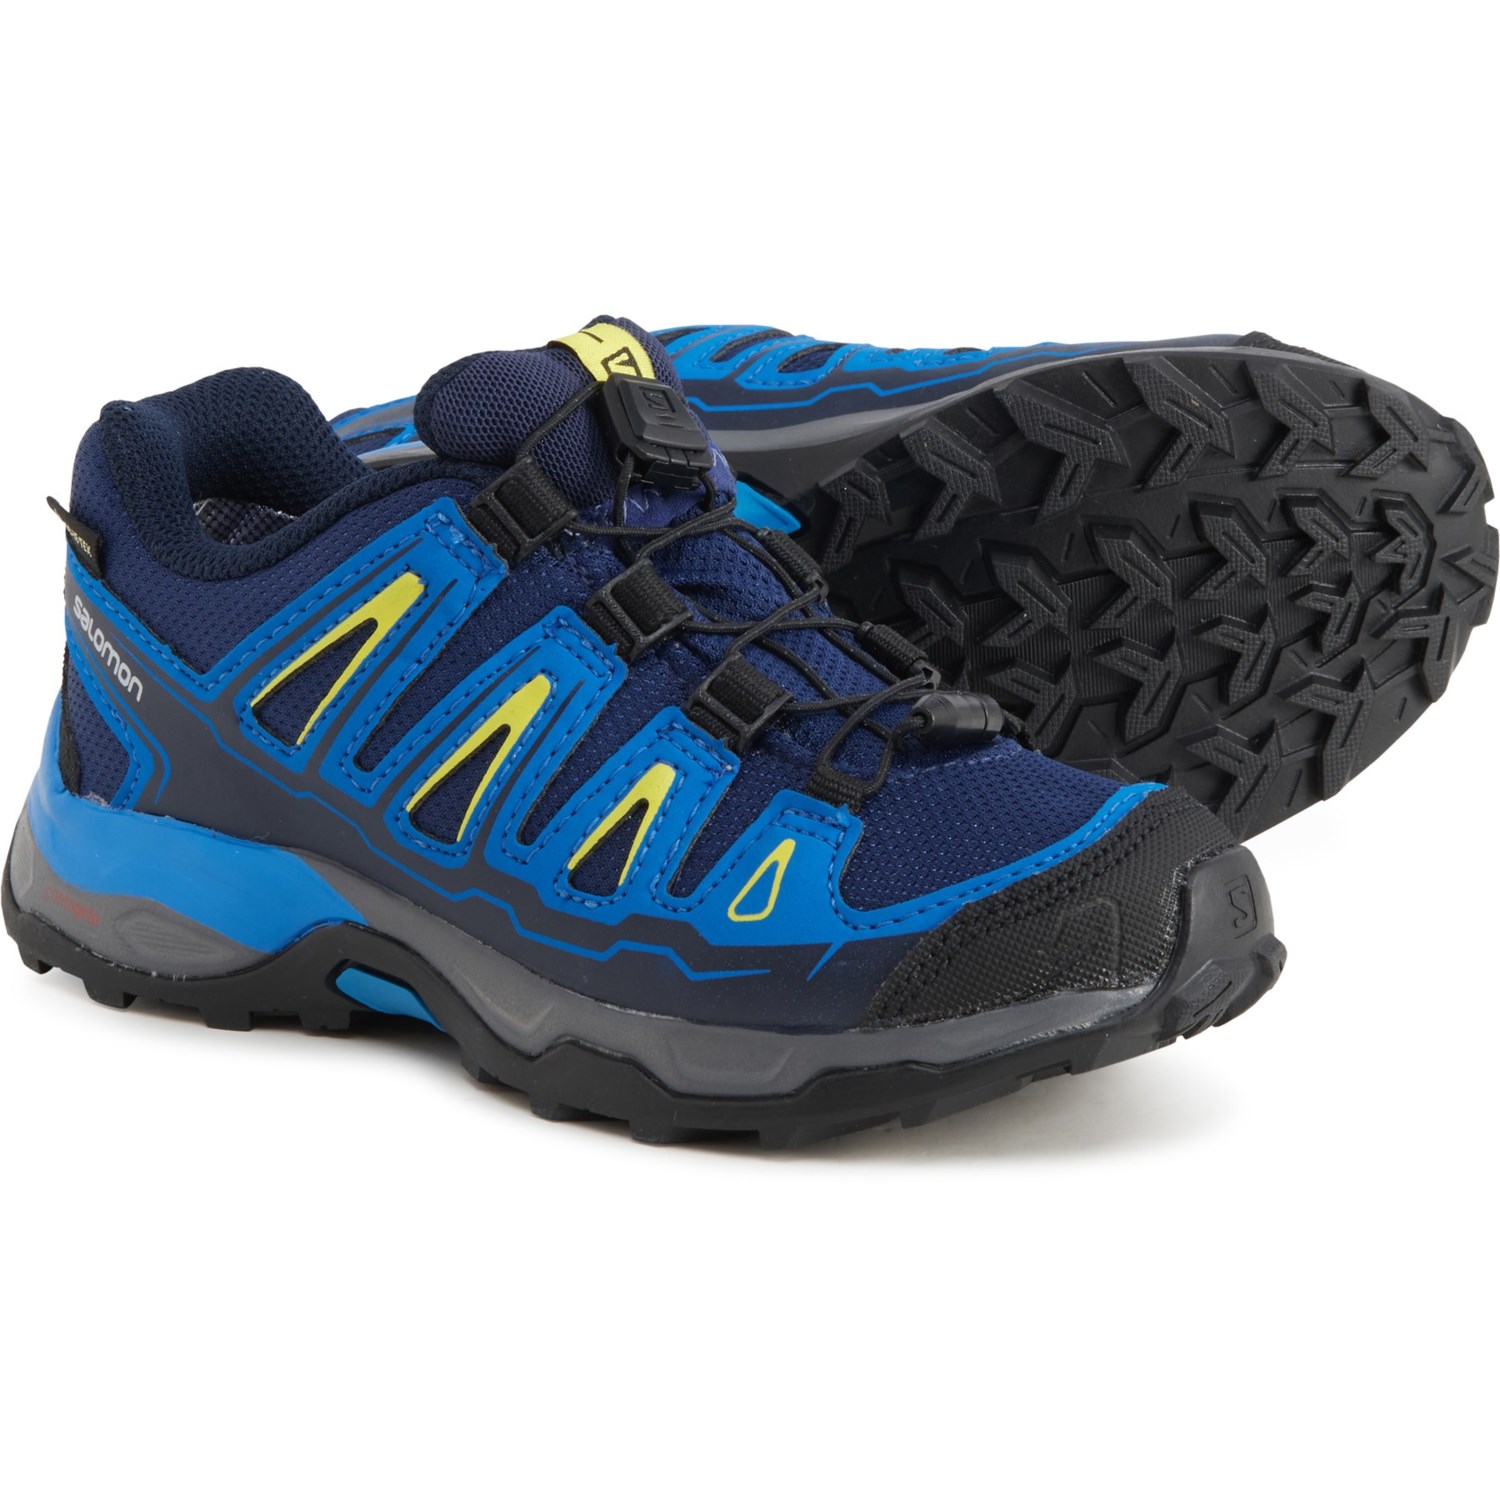 zondag oplichterij Reiziger Salomon Boys X-Ultra Gore-Tex® Jr. Hiking Shoes - Waterproof - Save 27%